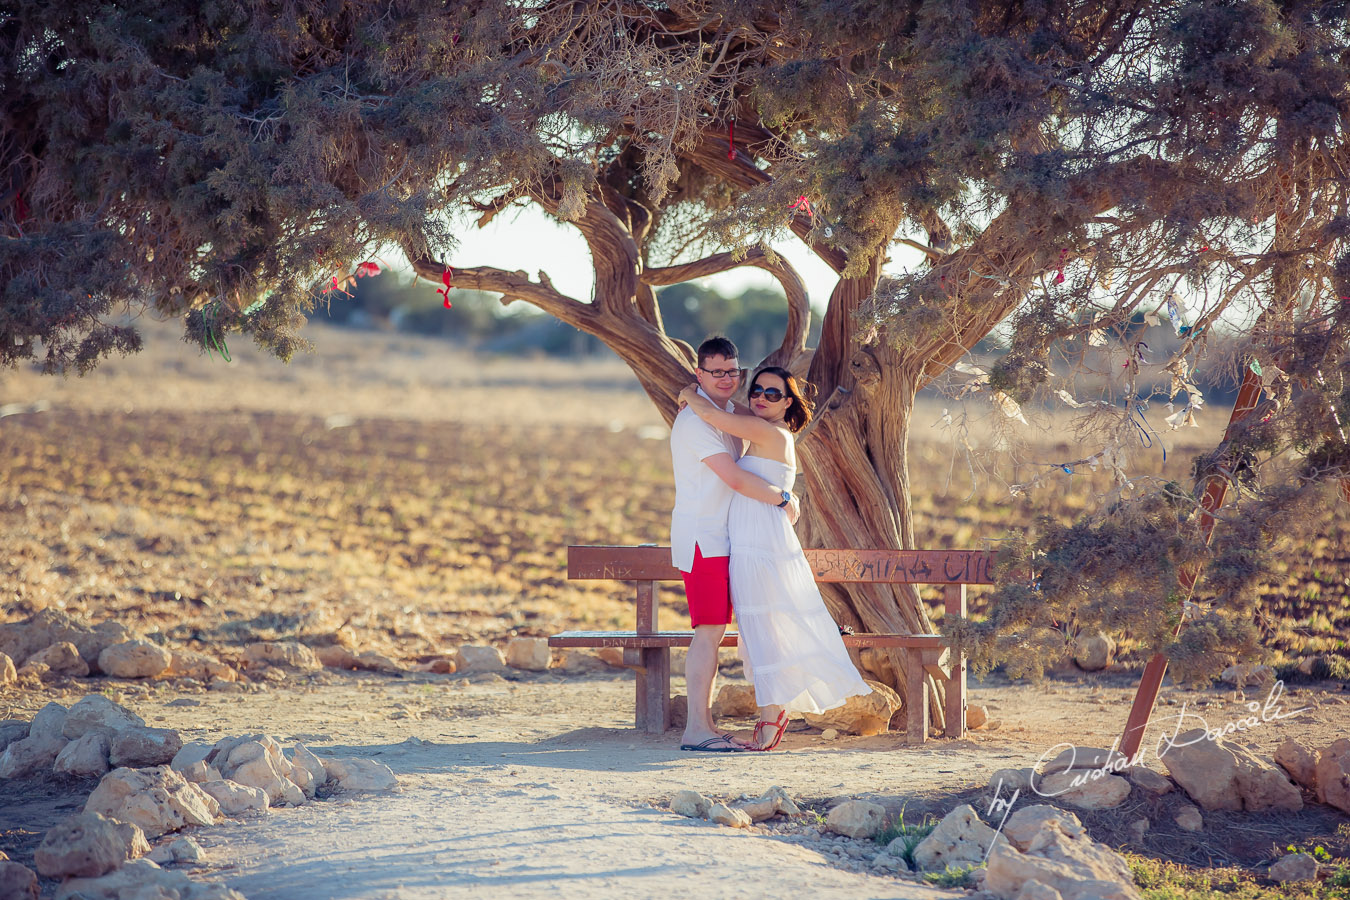 Photo Shoot in Cyprus - Anna & Konstantin in Protras, Cyprus